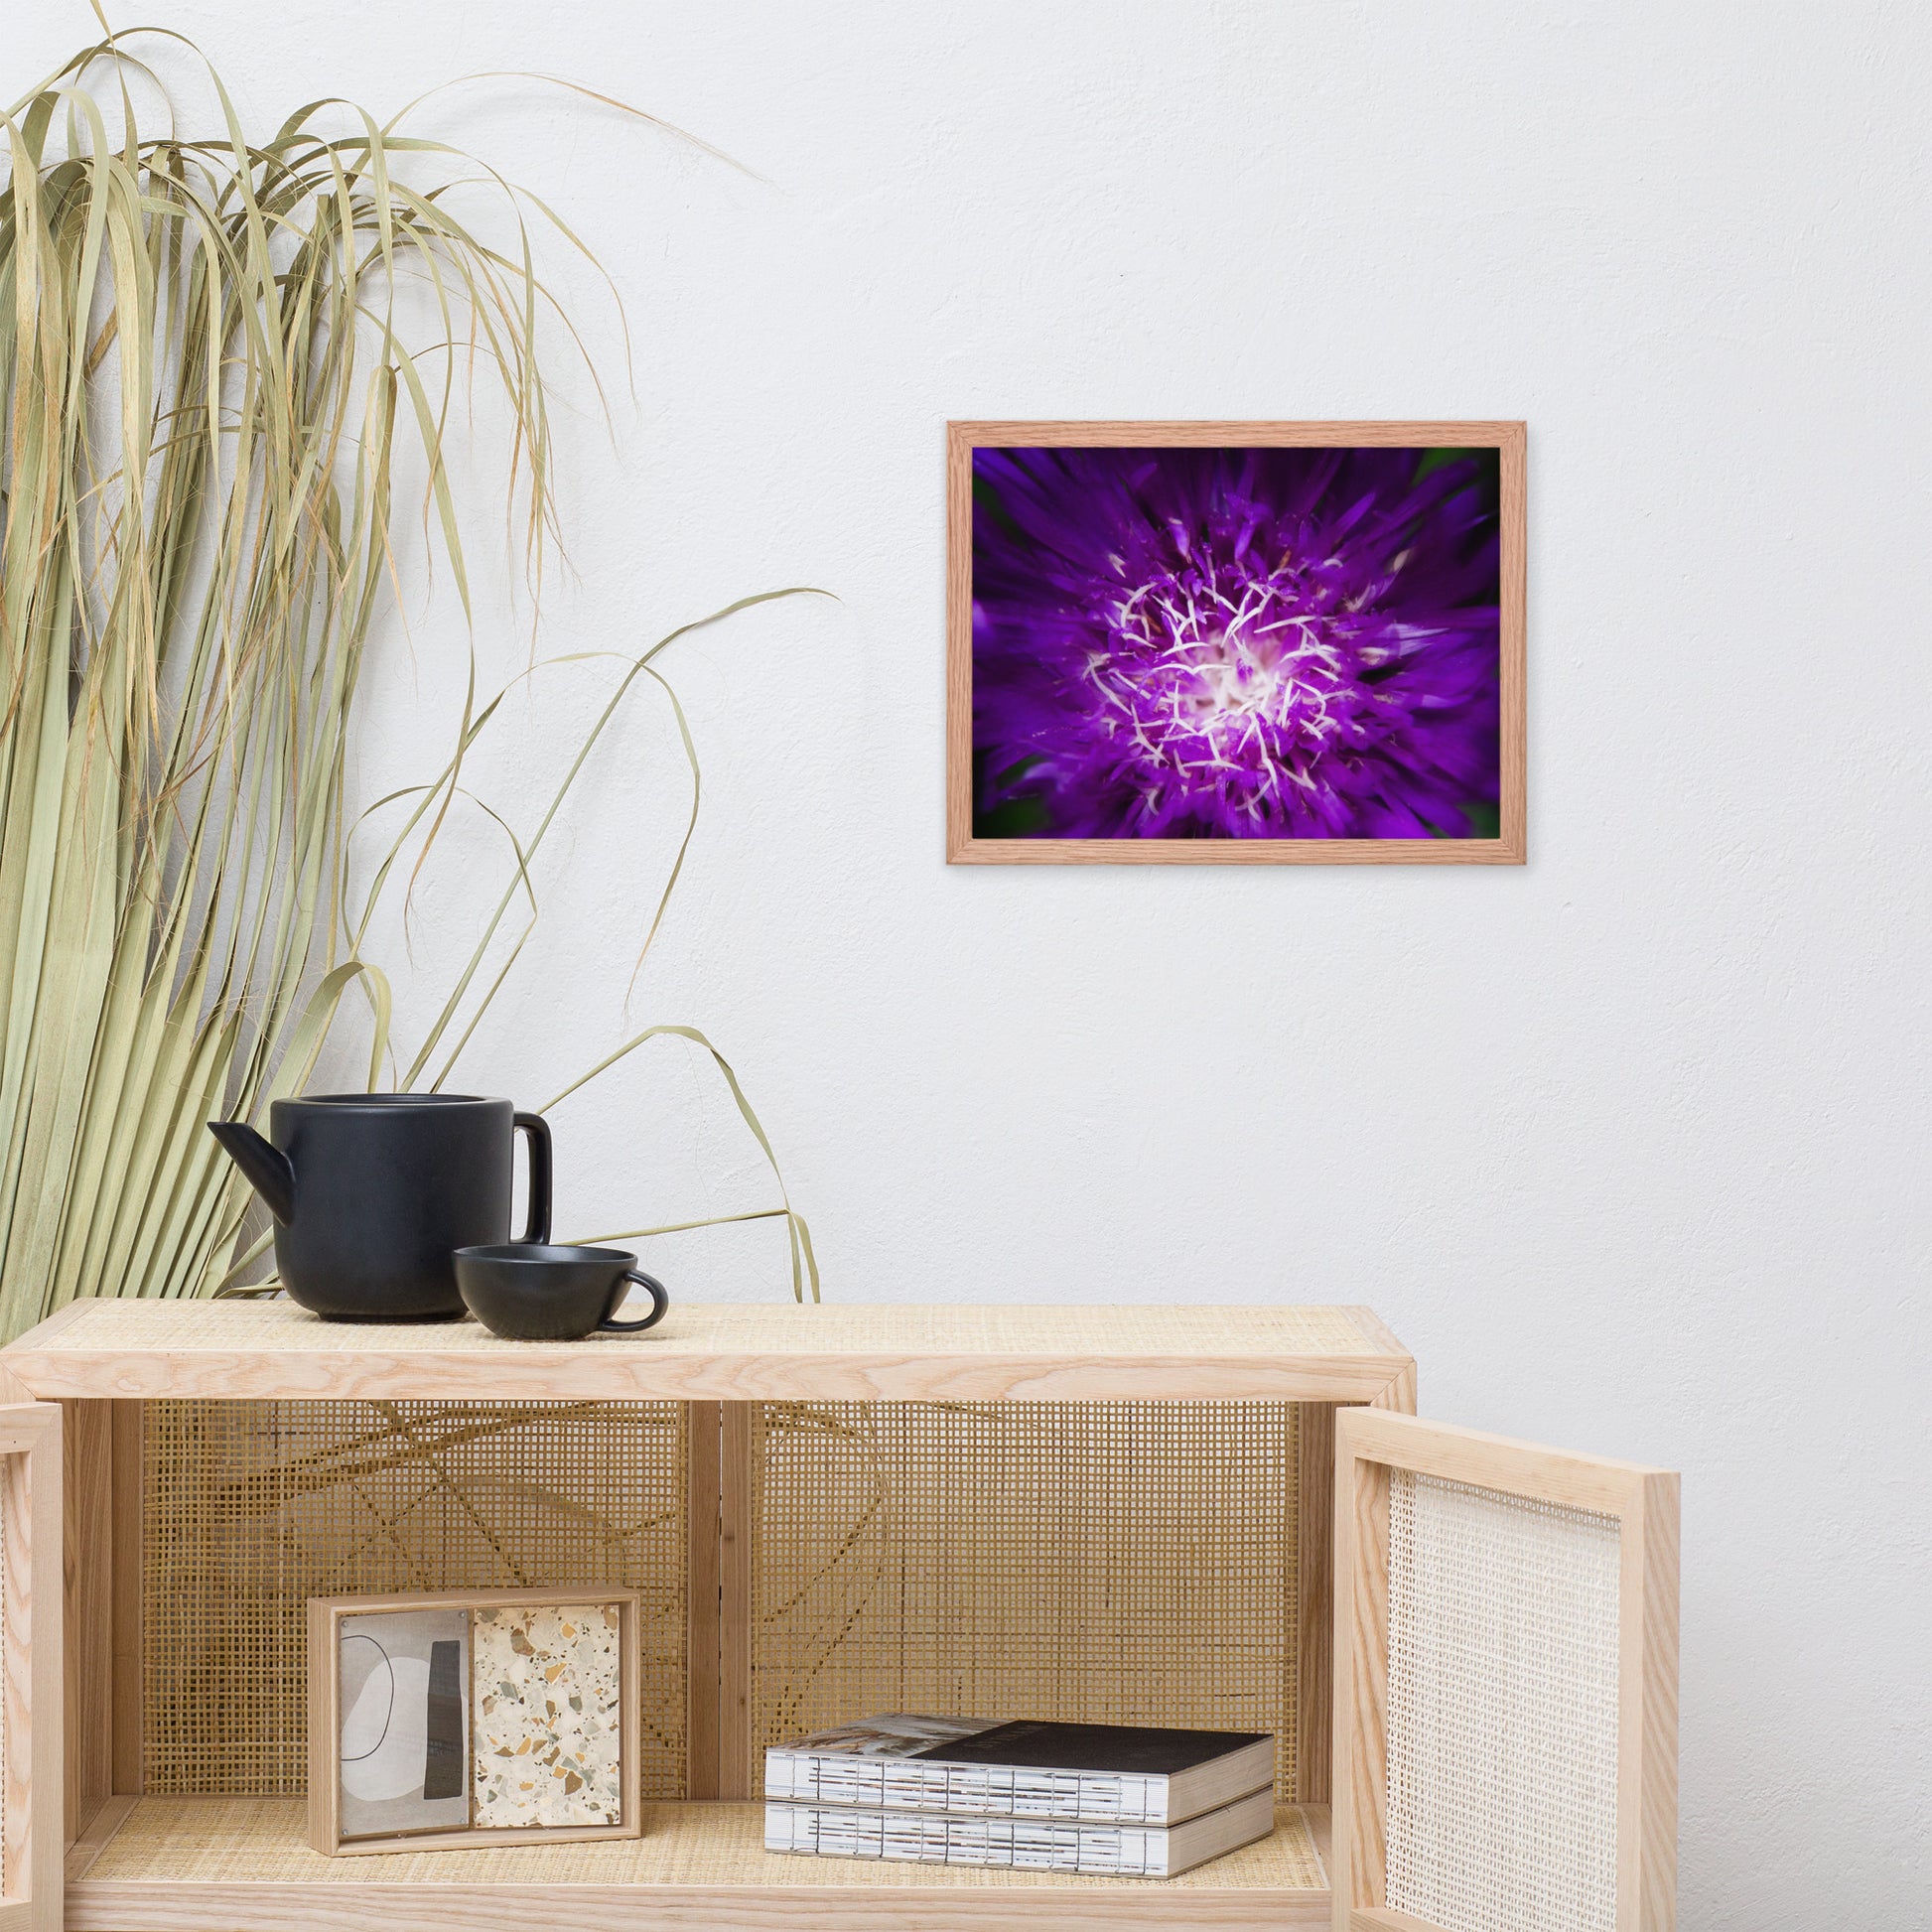 Modern Wall Frames For Living Room: Purple Abstract Flower - Botanical / Floral / Flora / Flowers / Nature Photograph Framed Wall Art Print - Artwork - Wall Decor